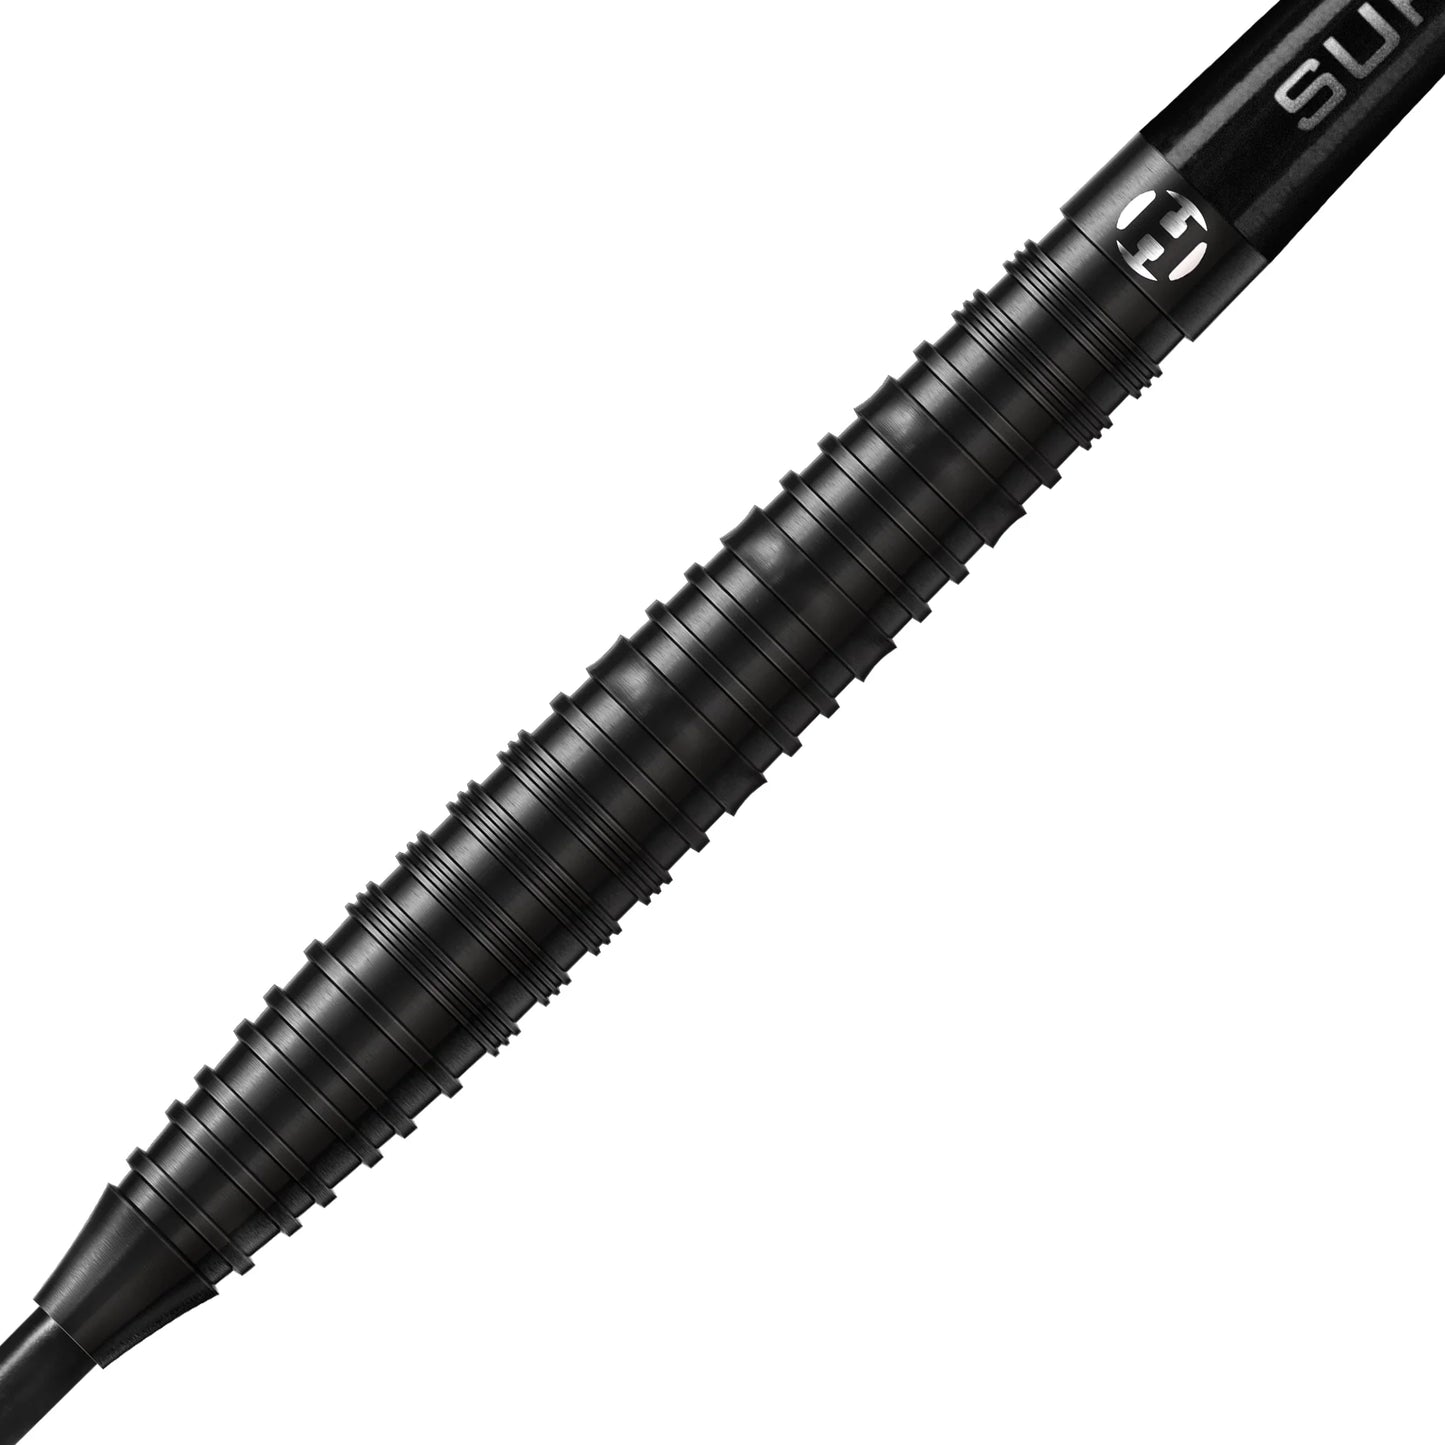 Harrows NX90 Black Edition 90% Tungsten Steel Tip Darts 24g